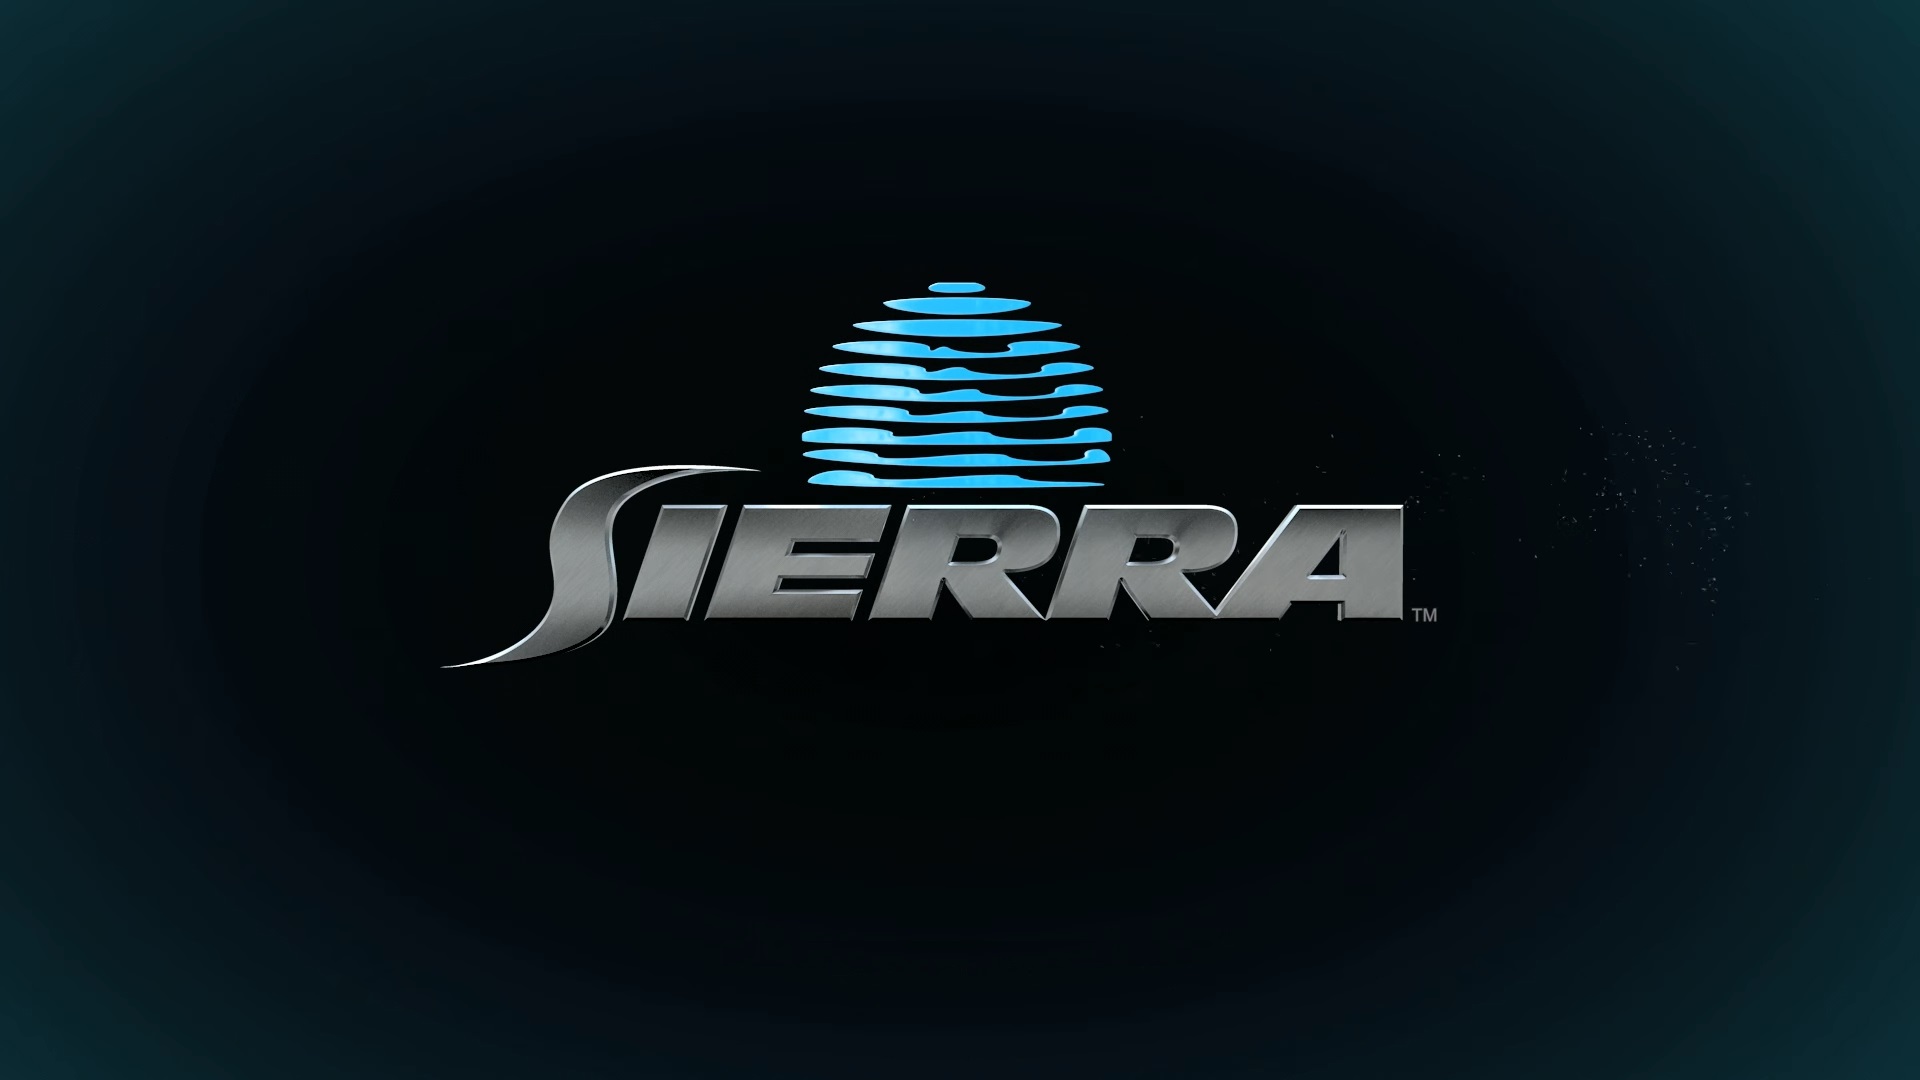 Sierra – historia i upadek marki, część druga (1990-2018)